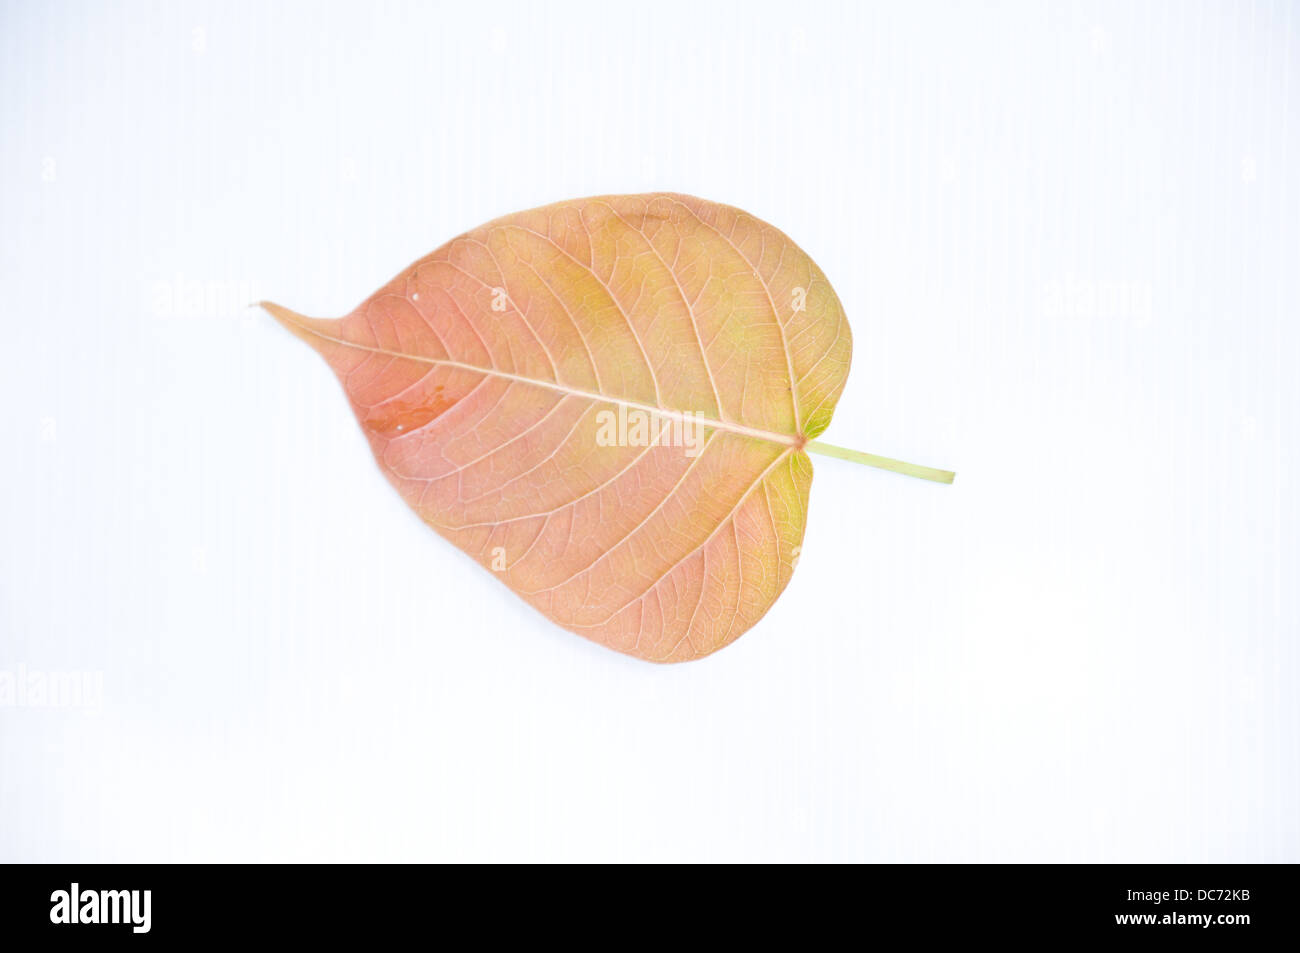 Bodh tree leaf on white background Stock Photo